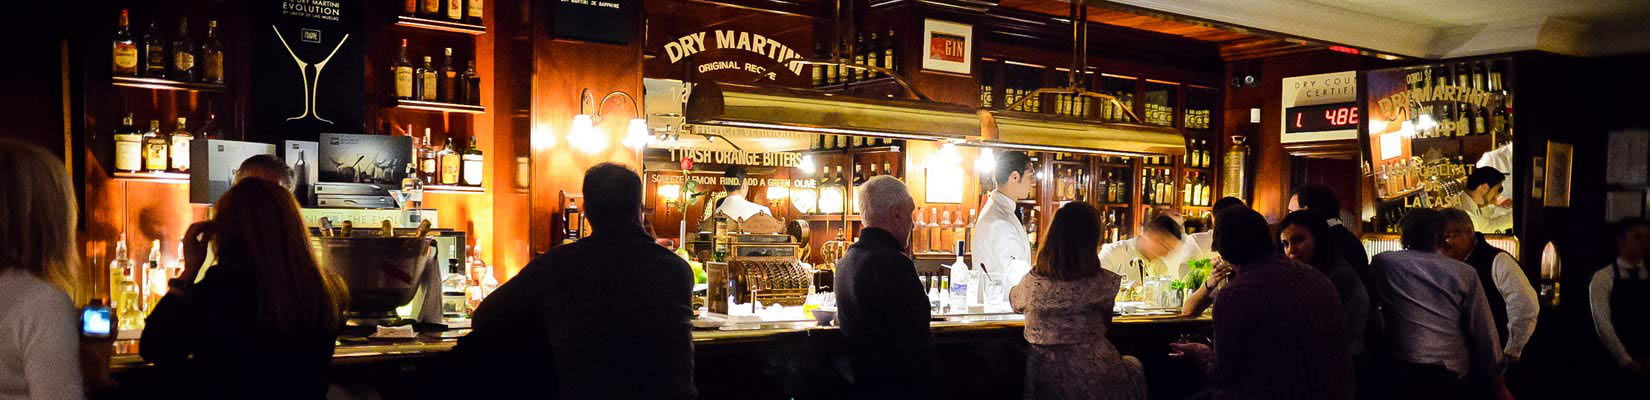 Dry Martini Barcelona 